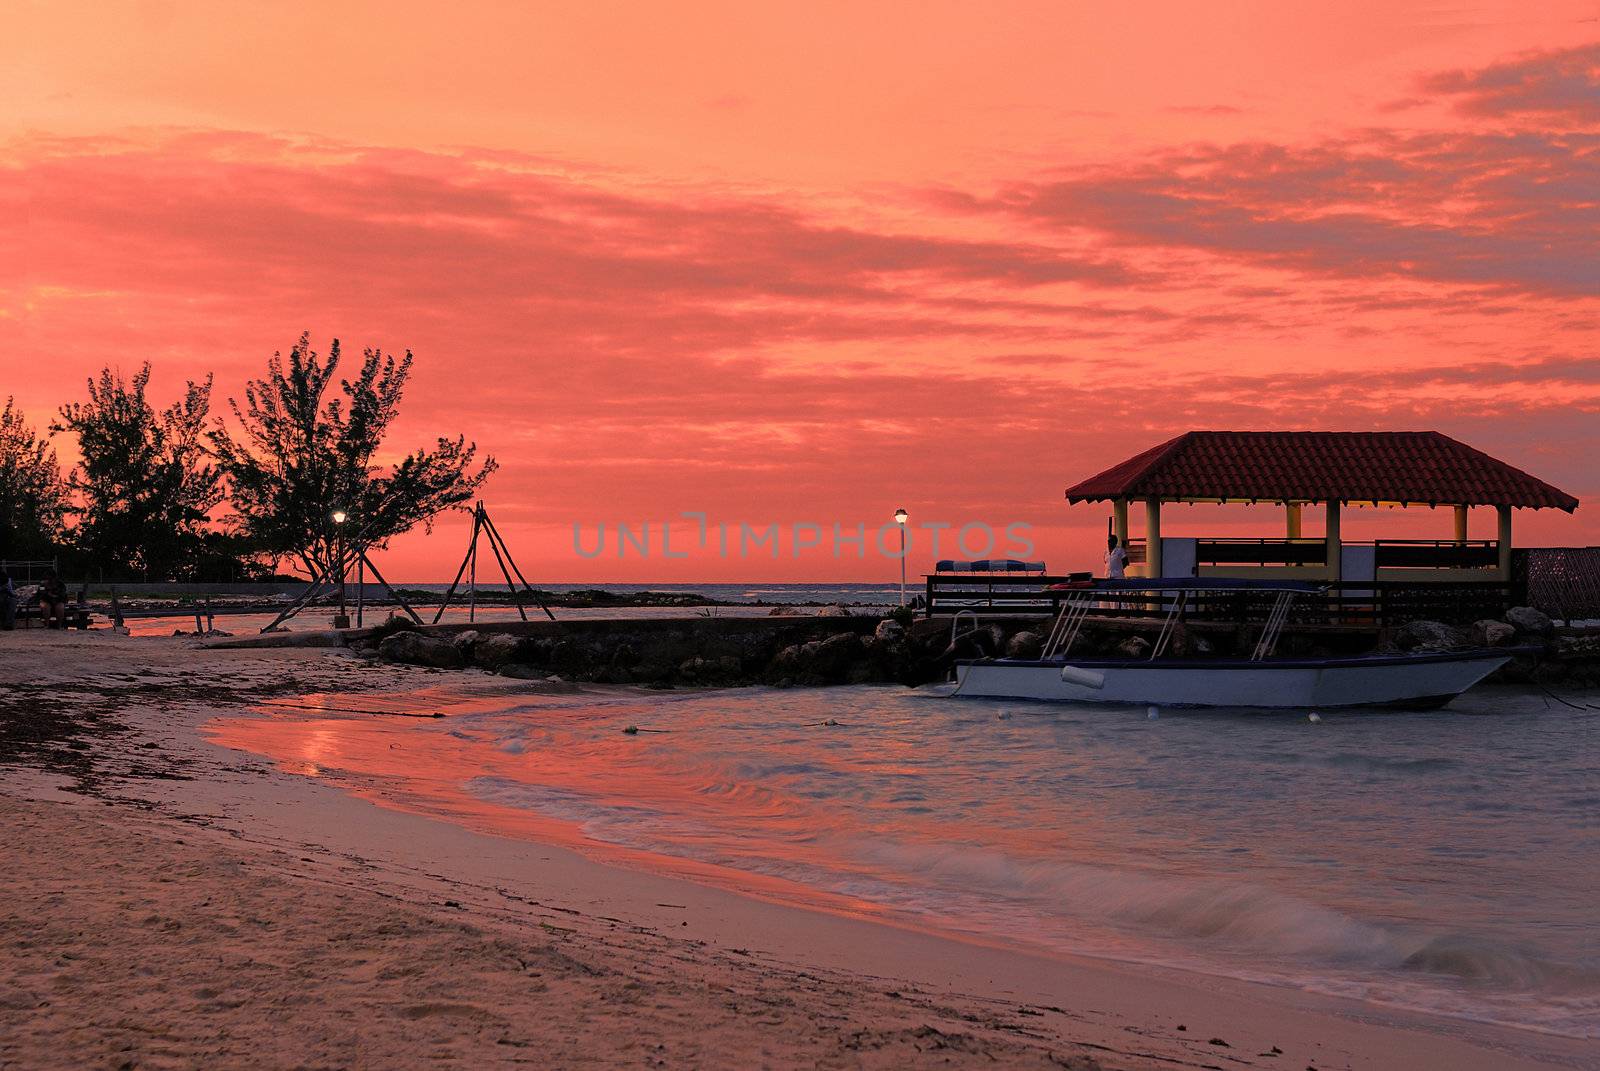 Sunrise or sunset on a tropical island